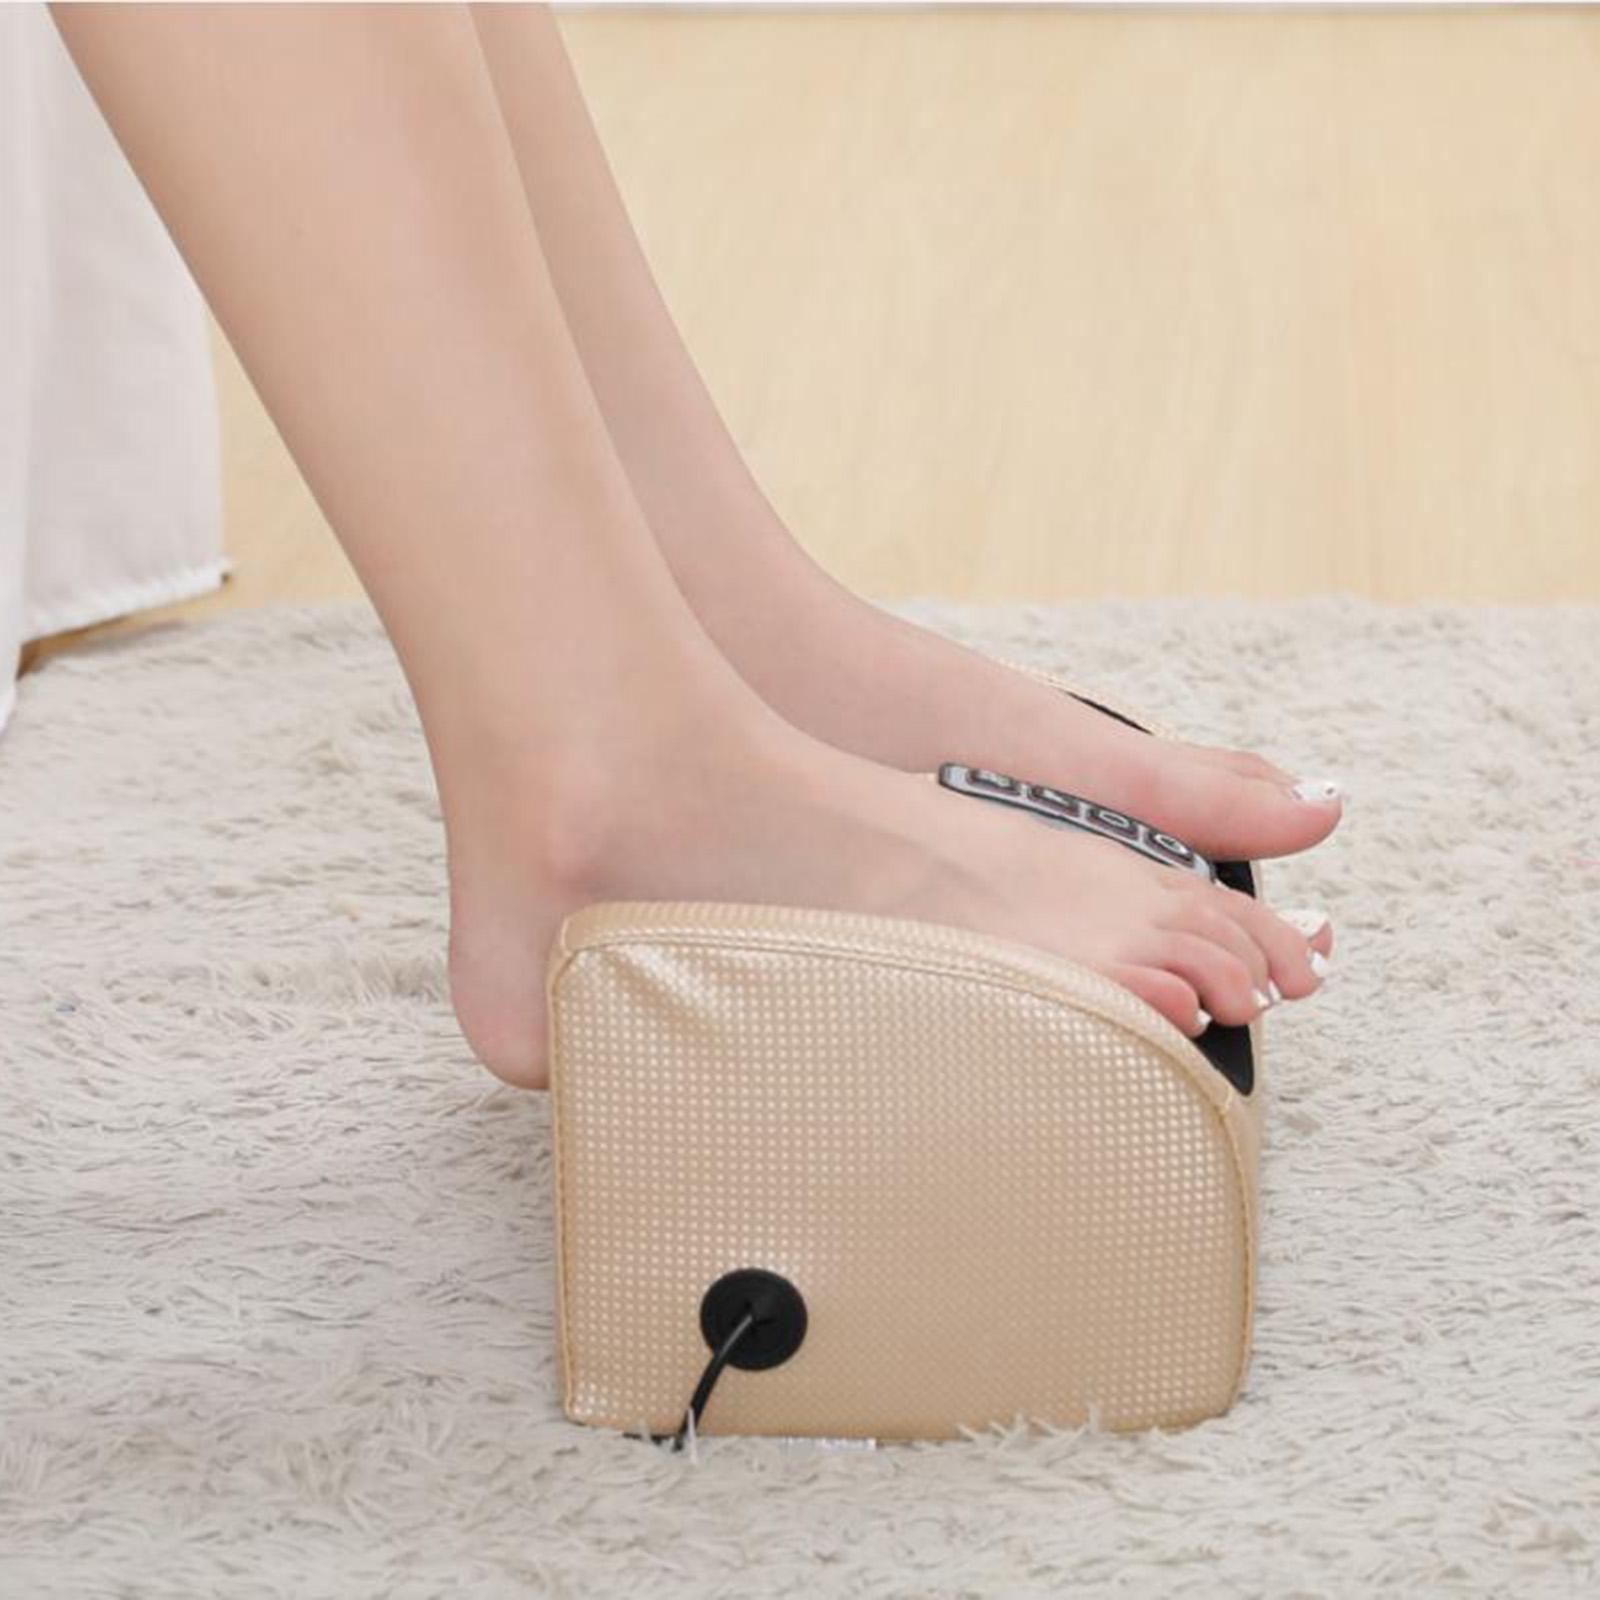 Foot Shiatsu Massager Portable Vibrations Muscle Relaxation for Feet Leg Gift